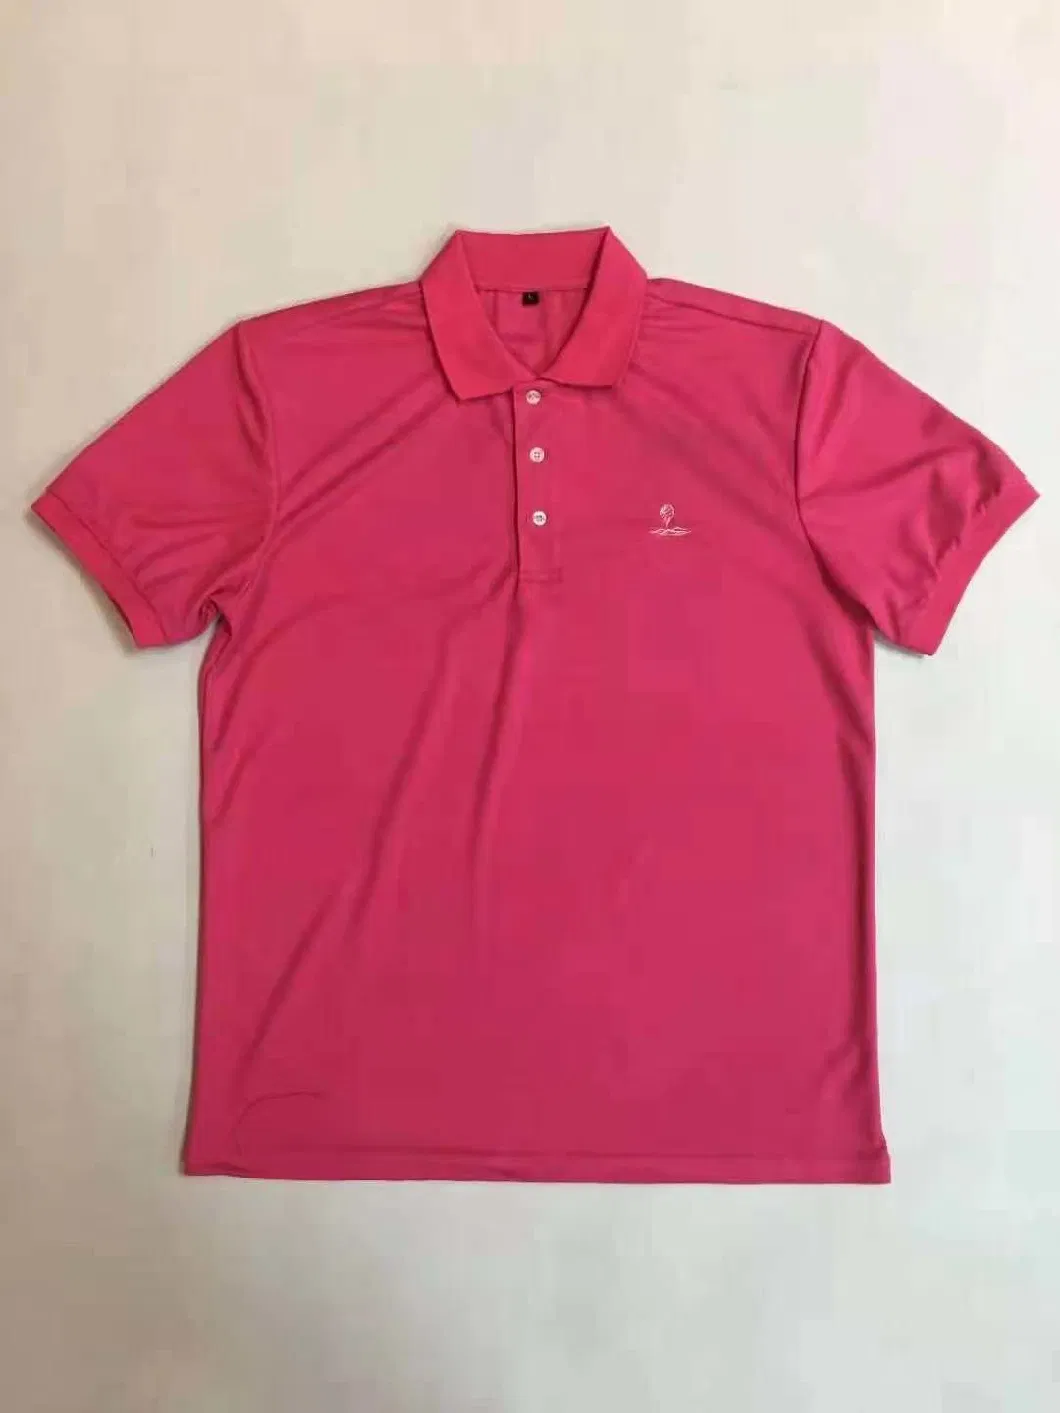 High Quality Cotton Printing Embroidery Design Uniform Mens Golf Sports Business Polo Shirt